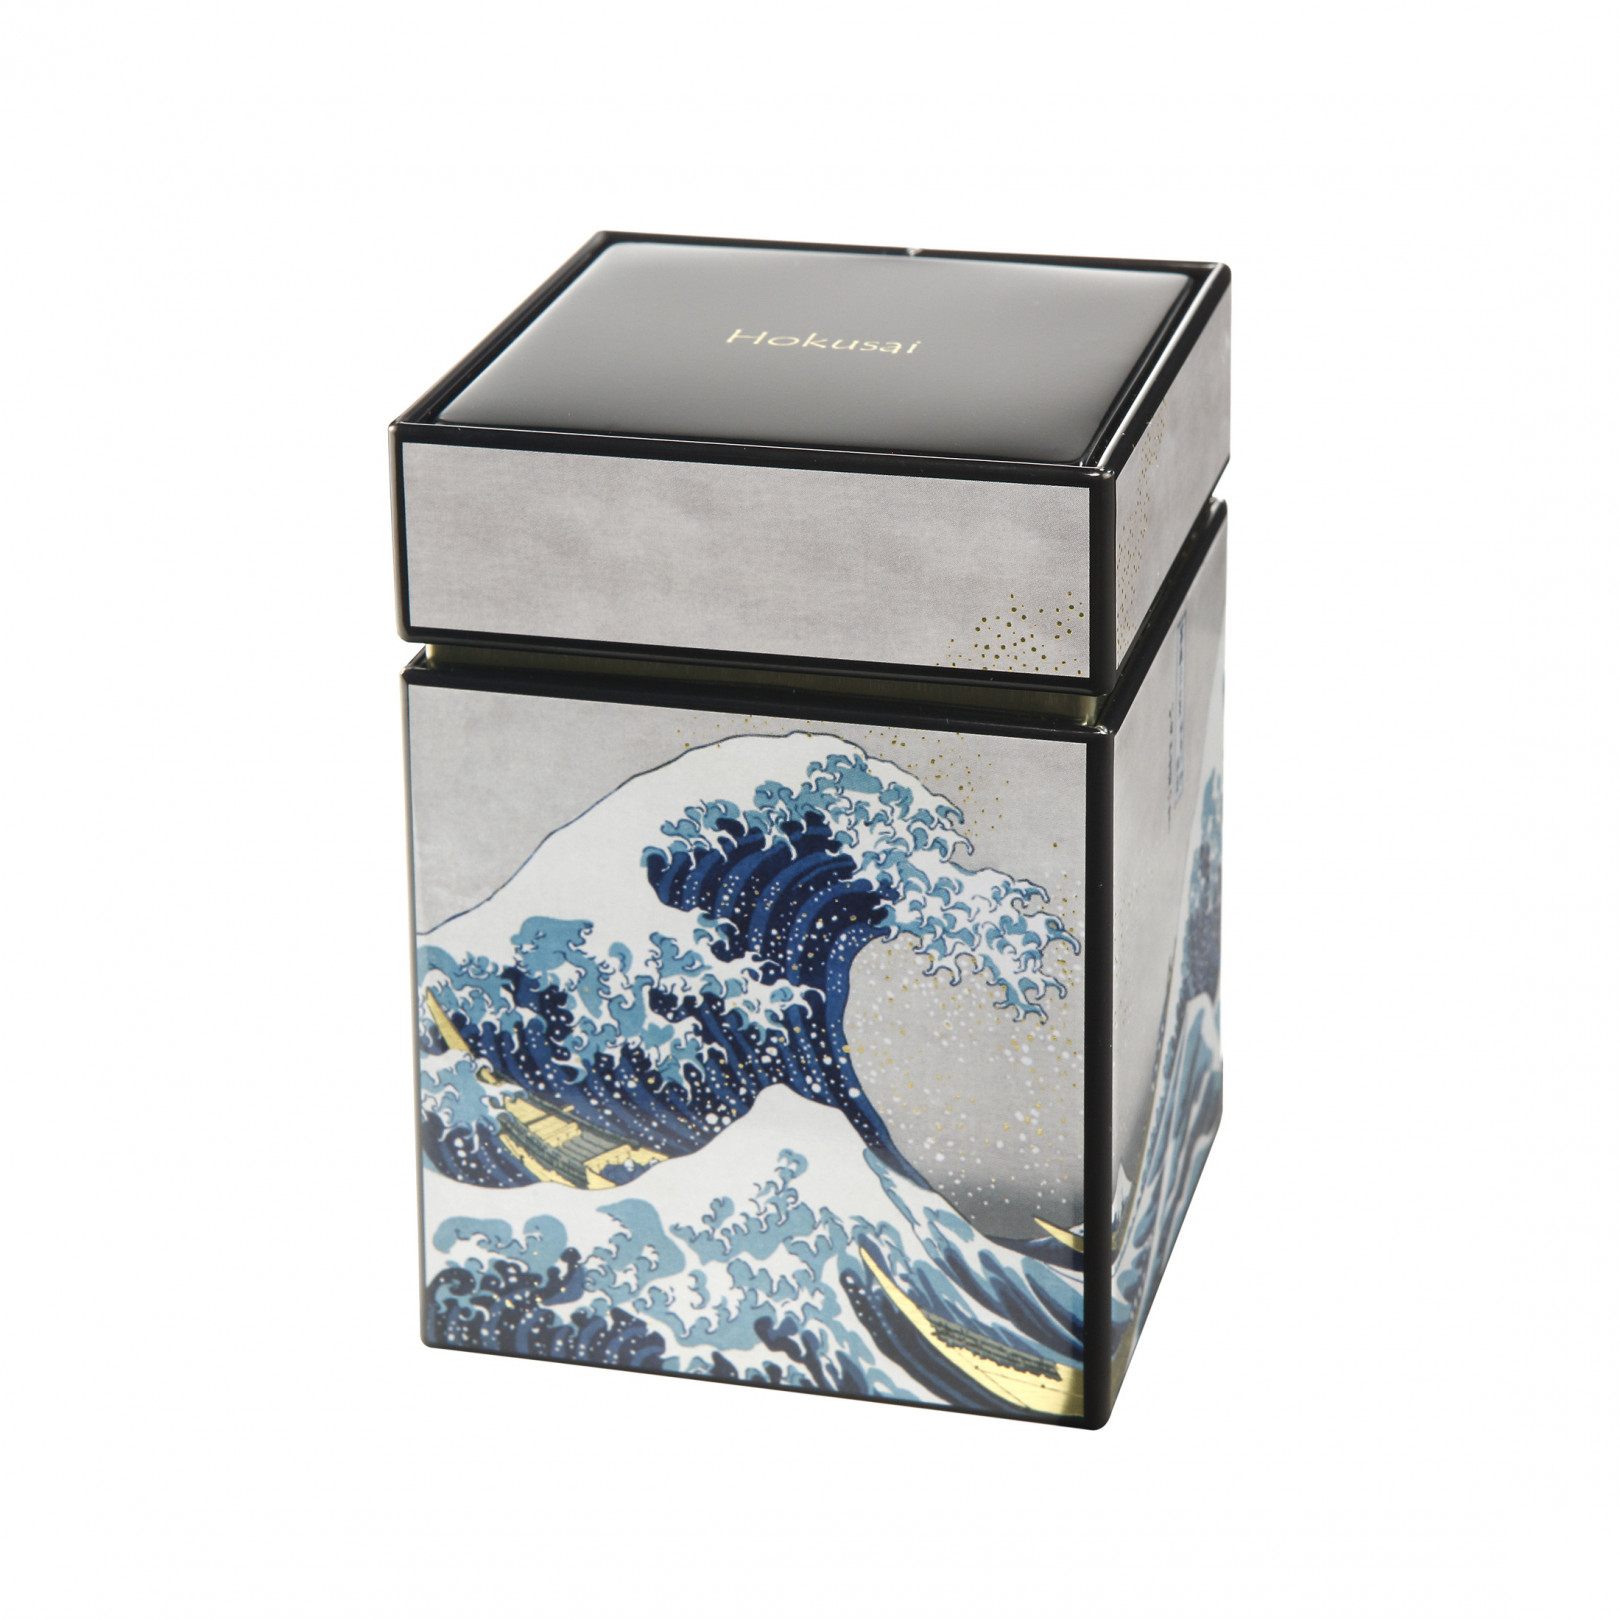 K.Hokusai - Wielka fala - Puszka 11 cm - Goebel